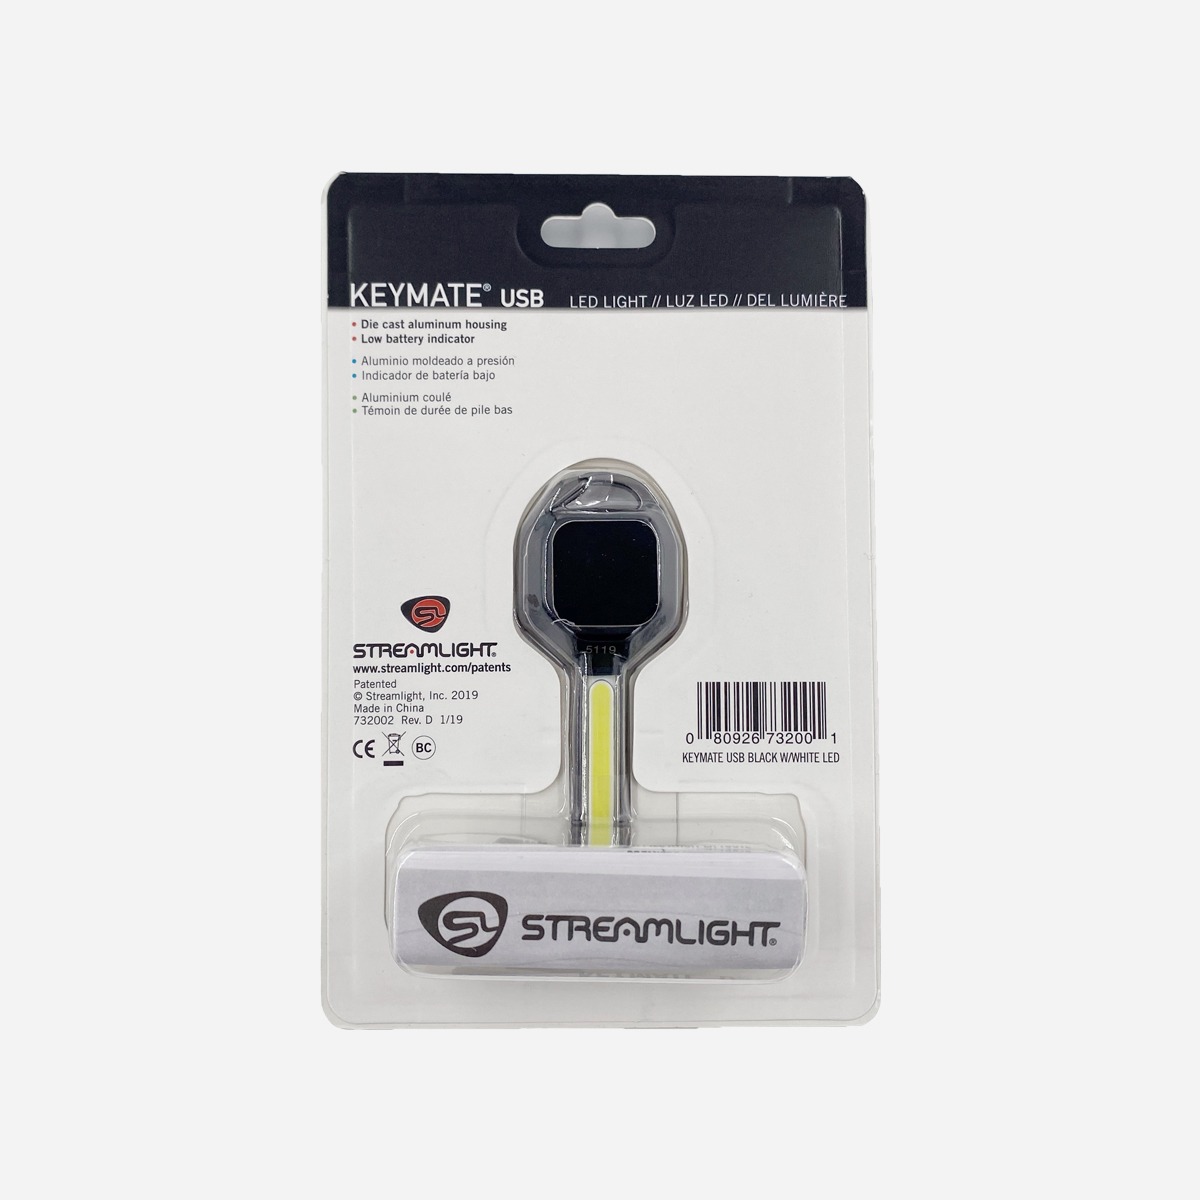 Streamlight – Keymate USB 35lm